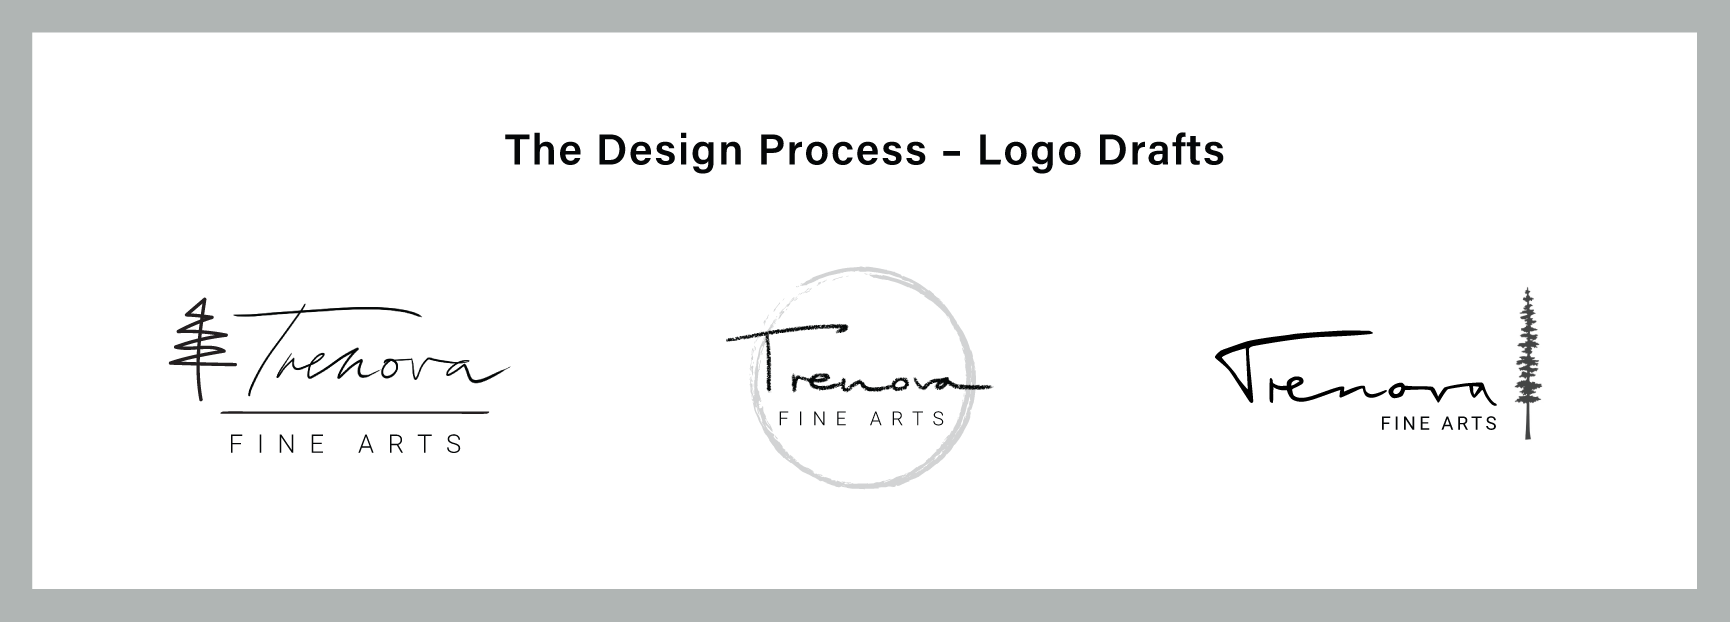 Logo Design Process, three logo drafts for Trenova